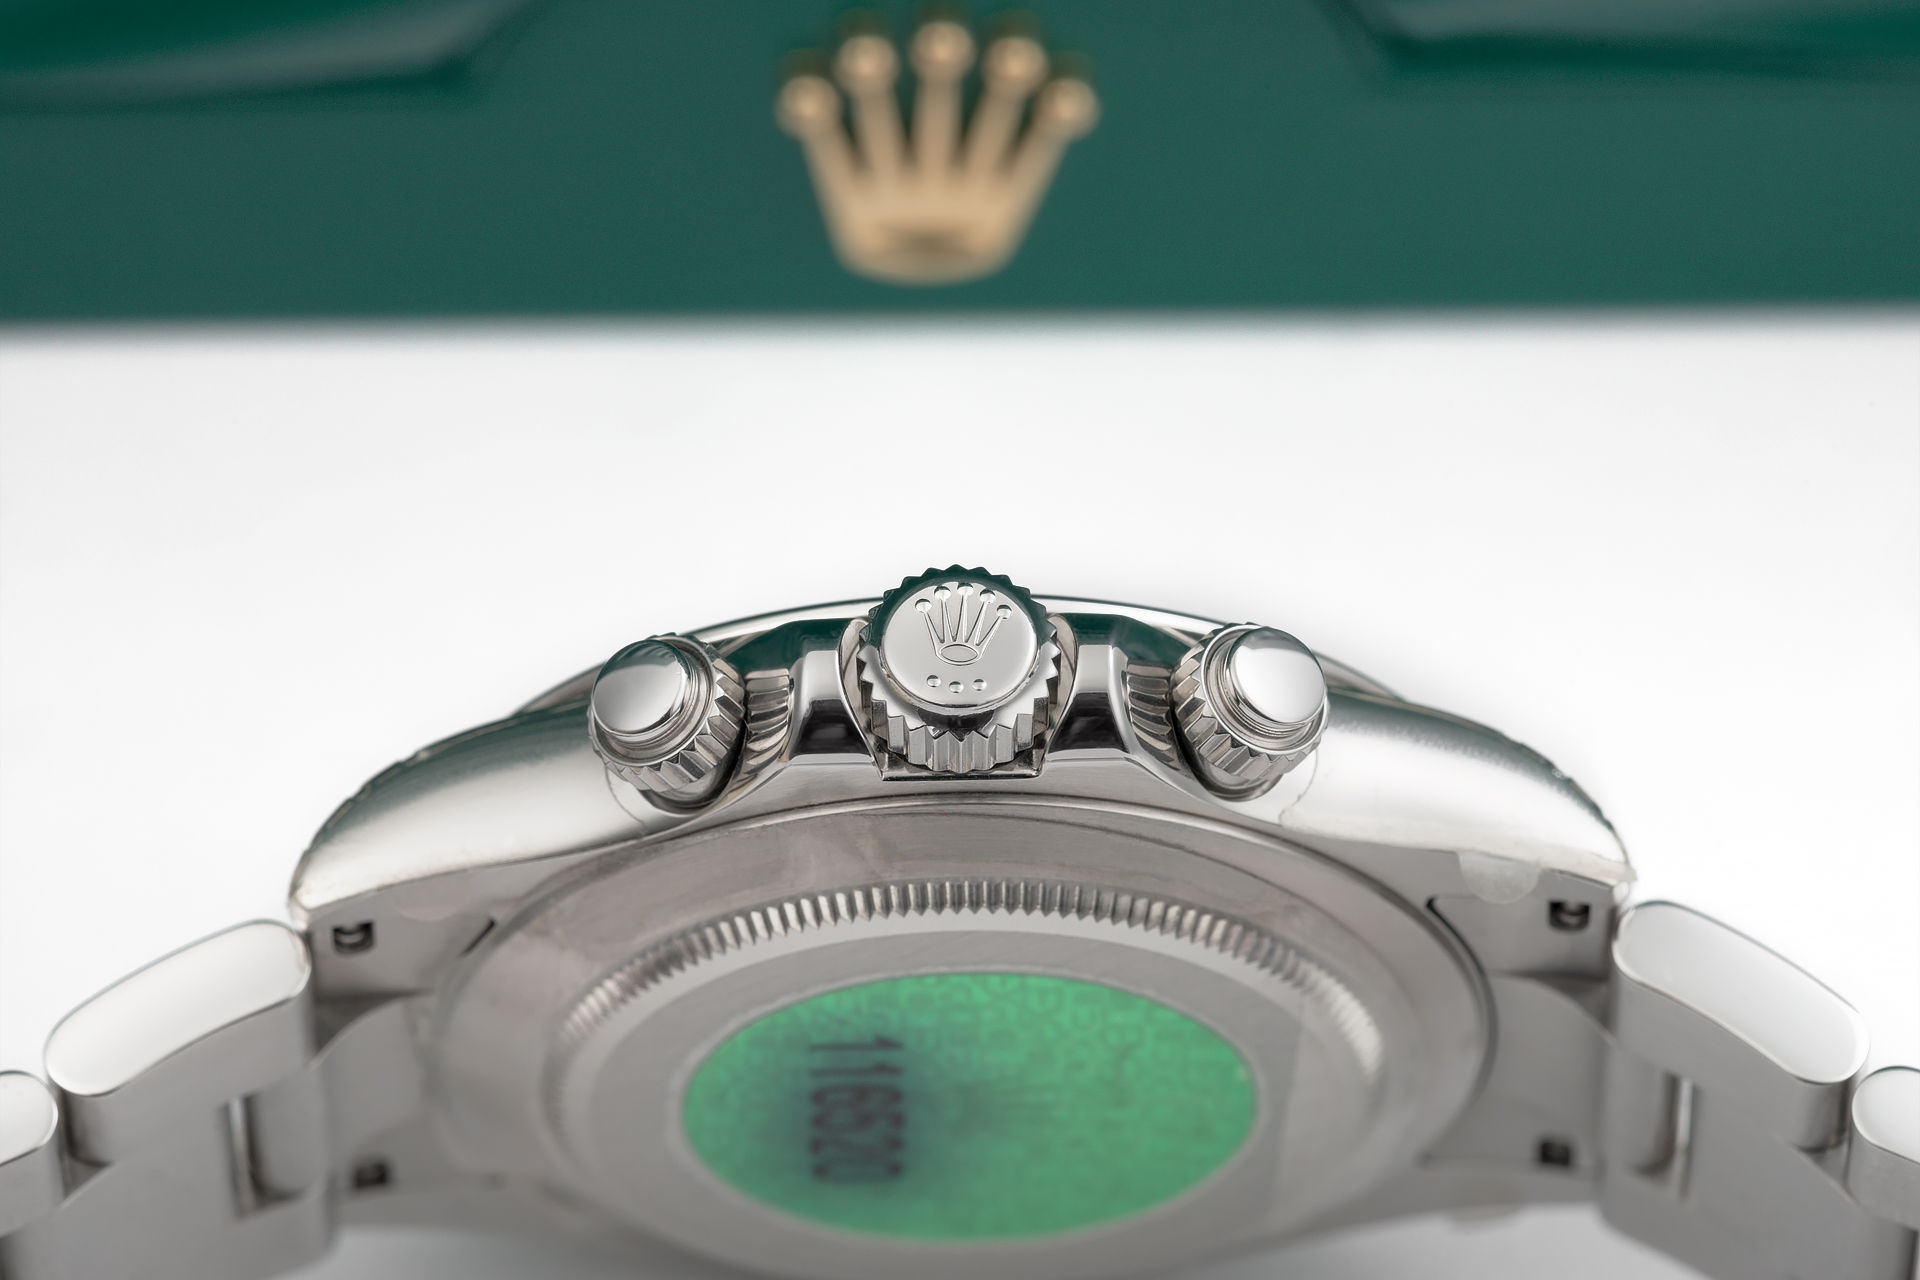 ref 116520 | 'NOS' - Discontinued | Rolex Cosmograph Daytona